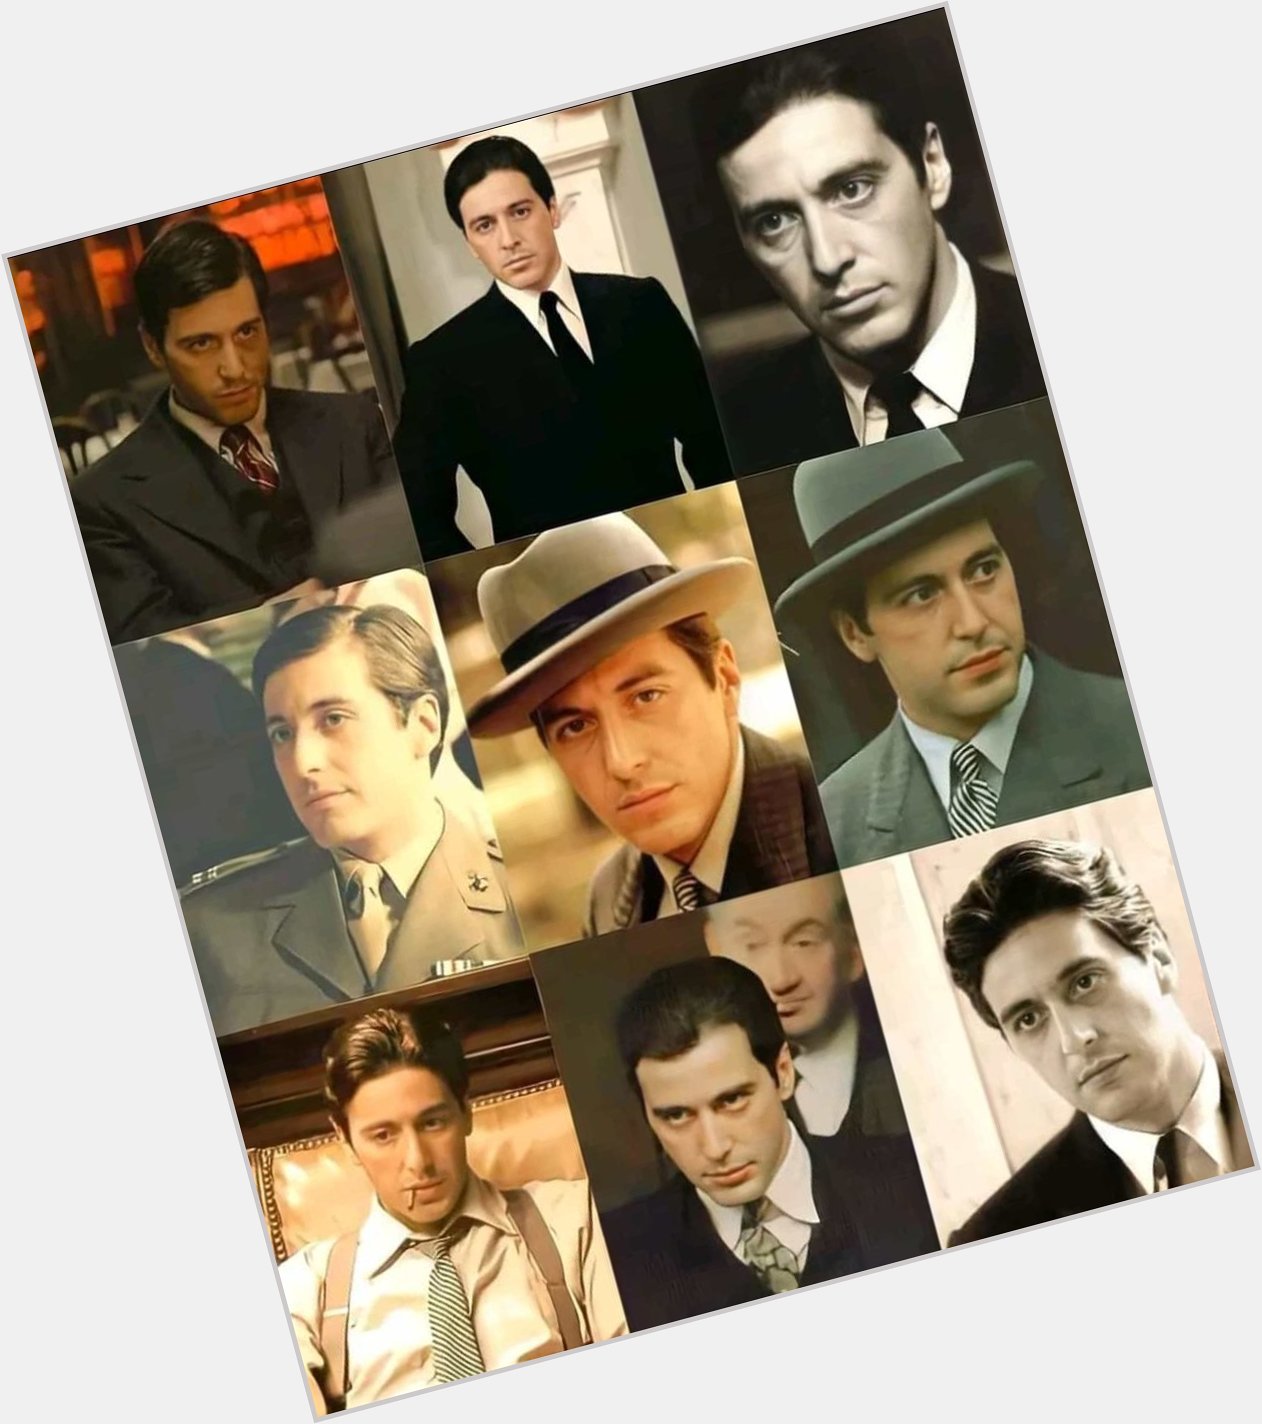 Happy birthday Al Pacino.
Happy birthday Legend. 